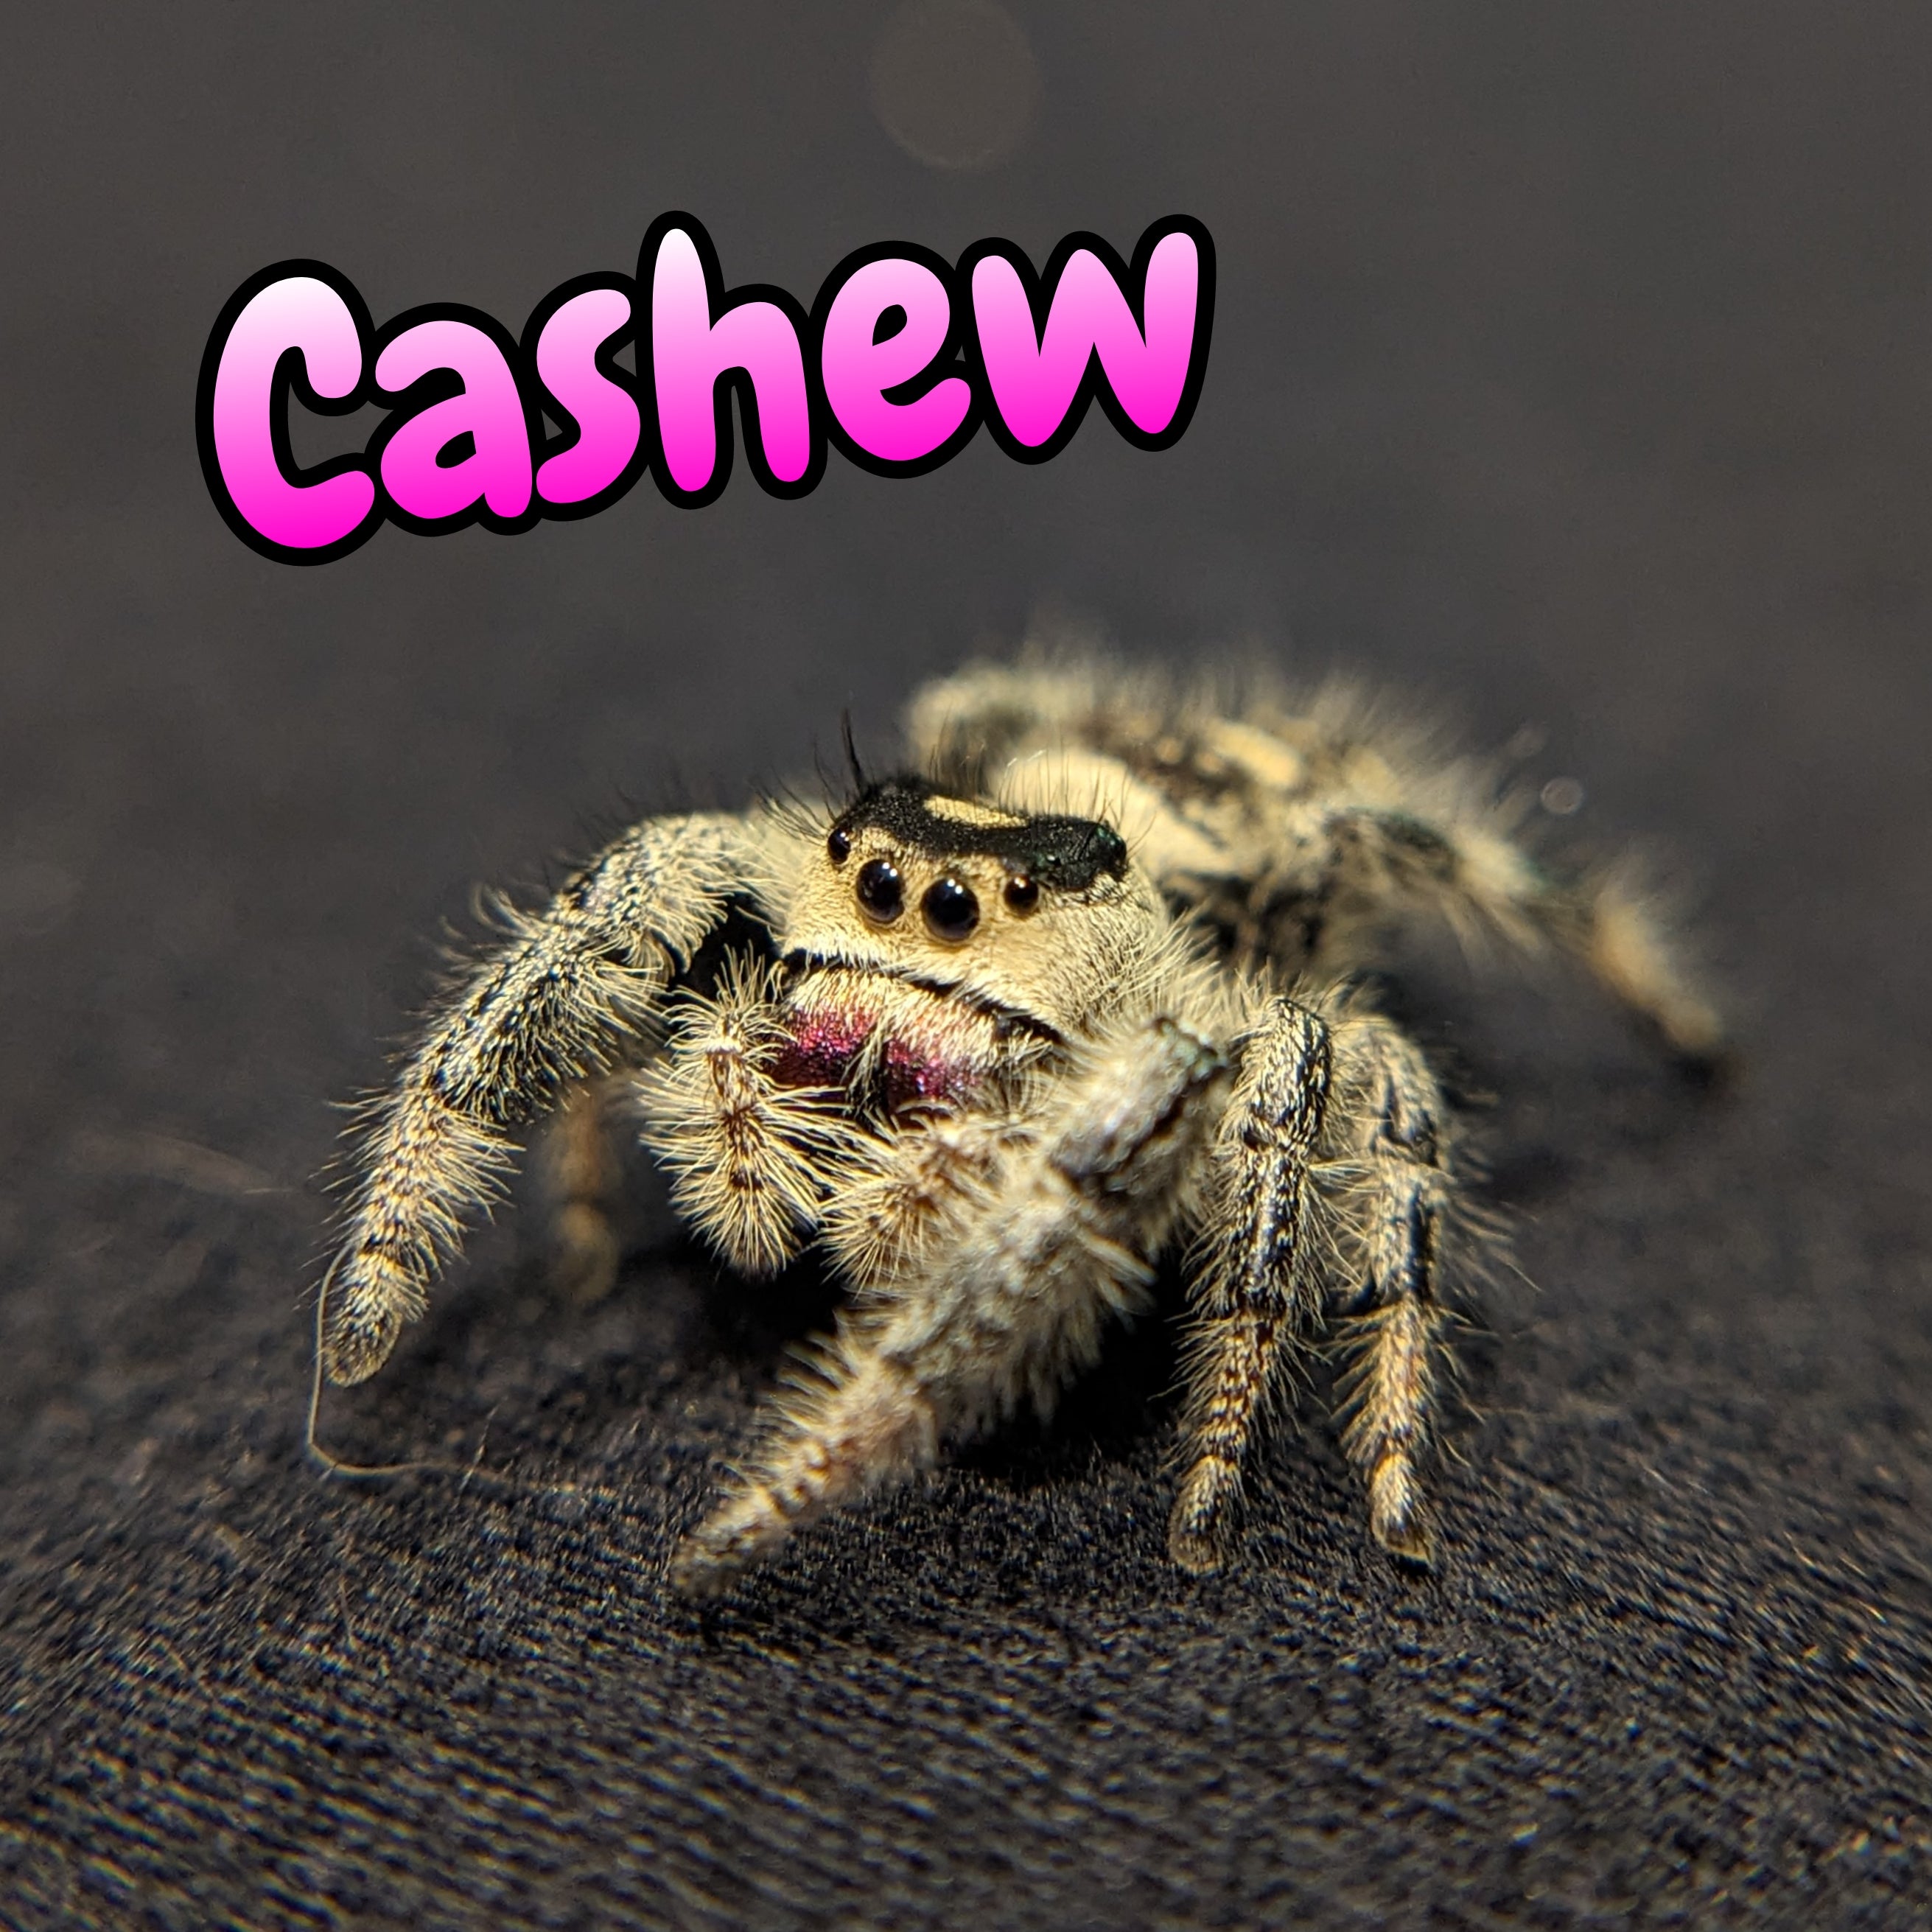 Regal Jumping Spider "Cashew"